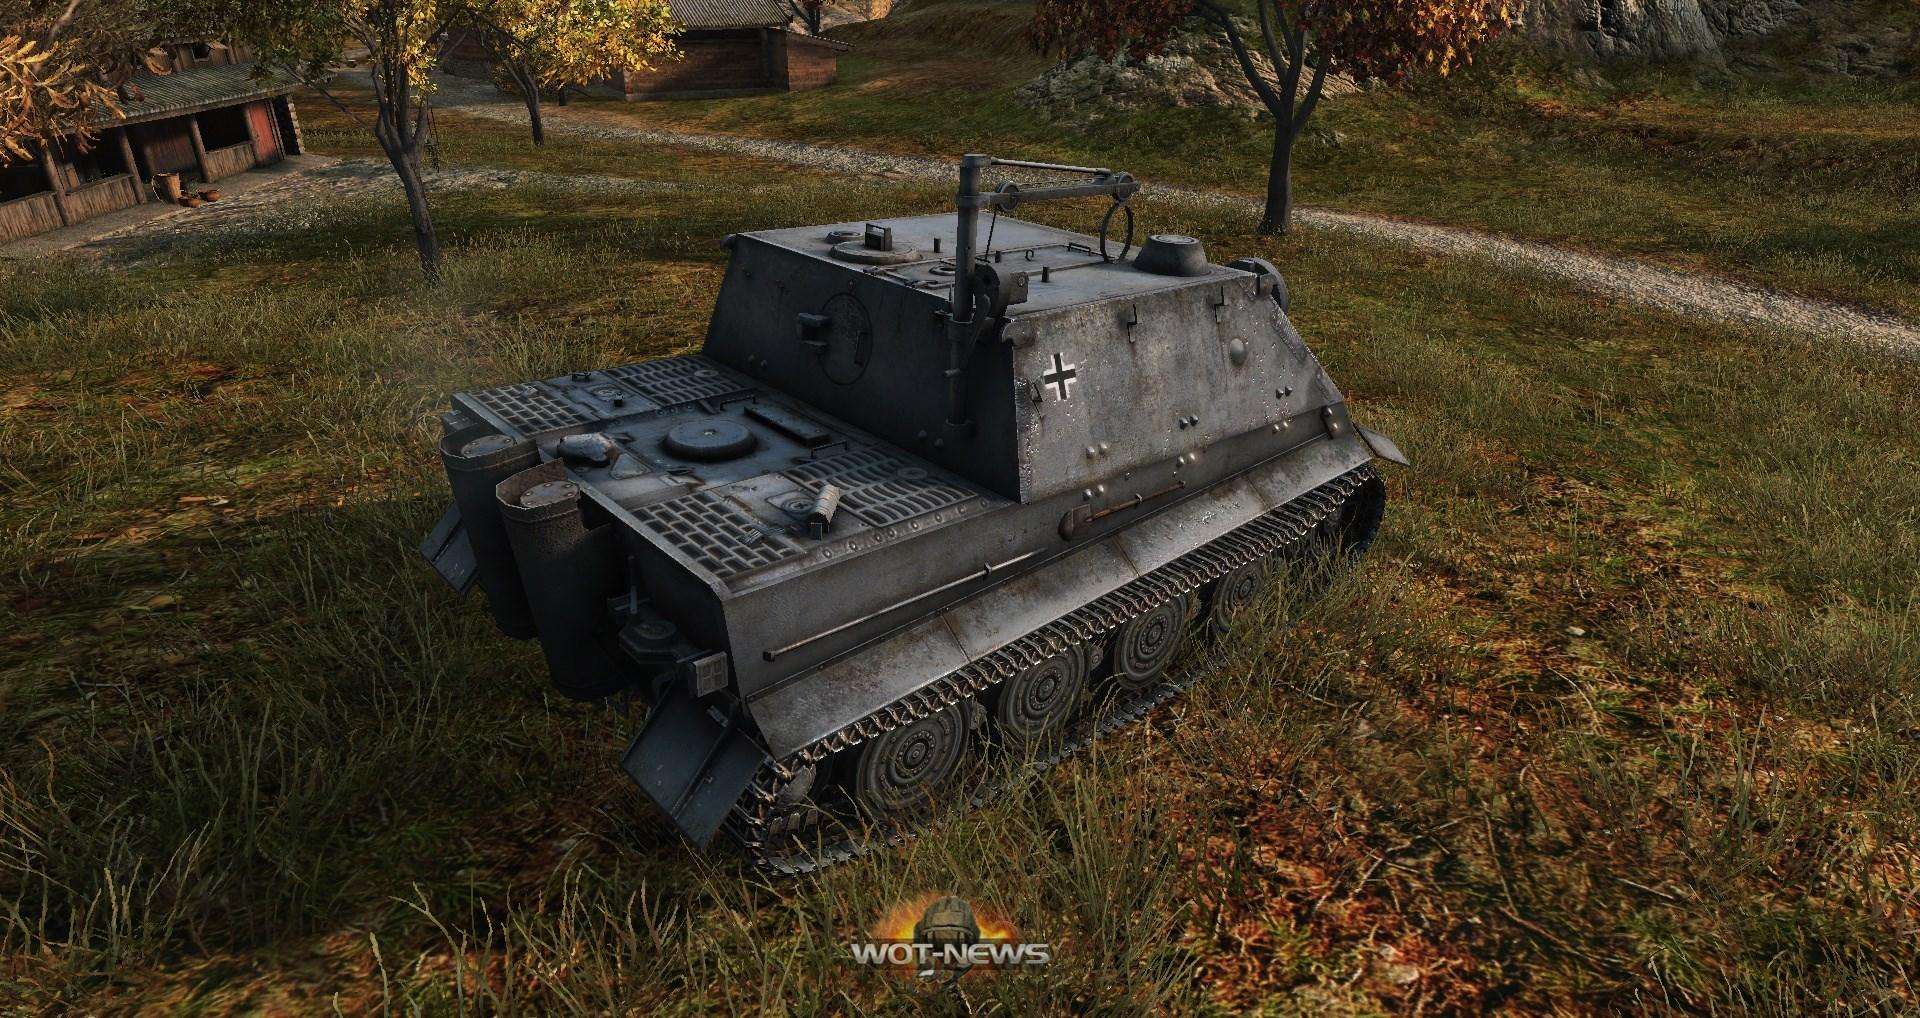 Sturmpanzer VI «Sturmtiger» Как танк выглядит в игре (SD) Original Uploads Img 082014 Sturm_ Original Uploads Img 082014 Sturm_ Original C410718 V410718544 689b